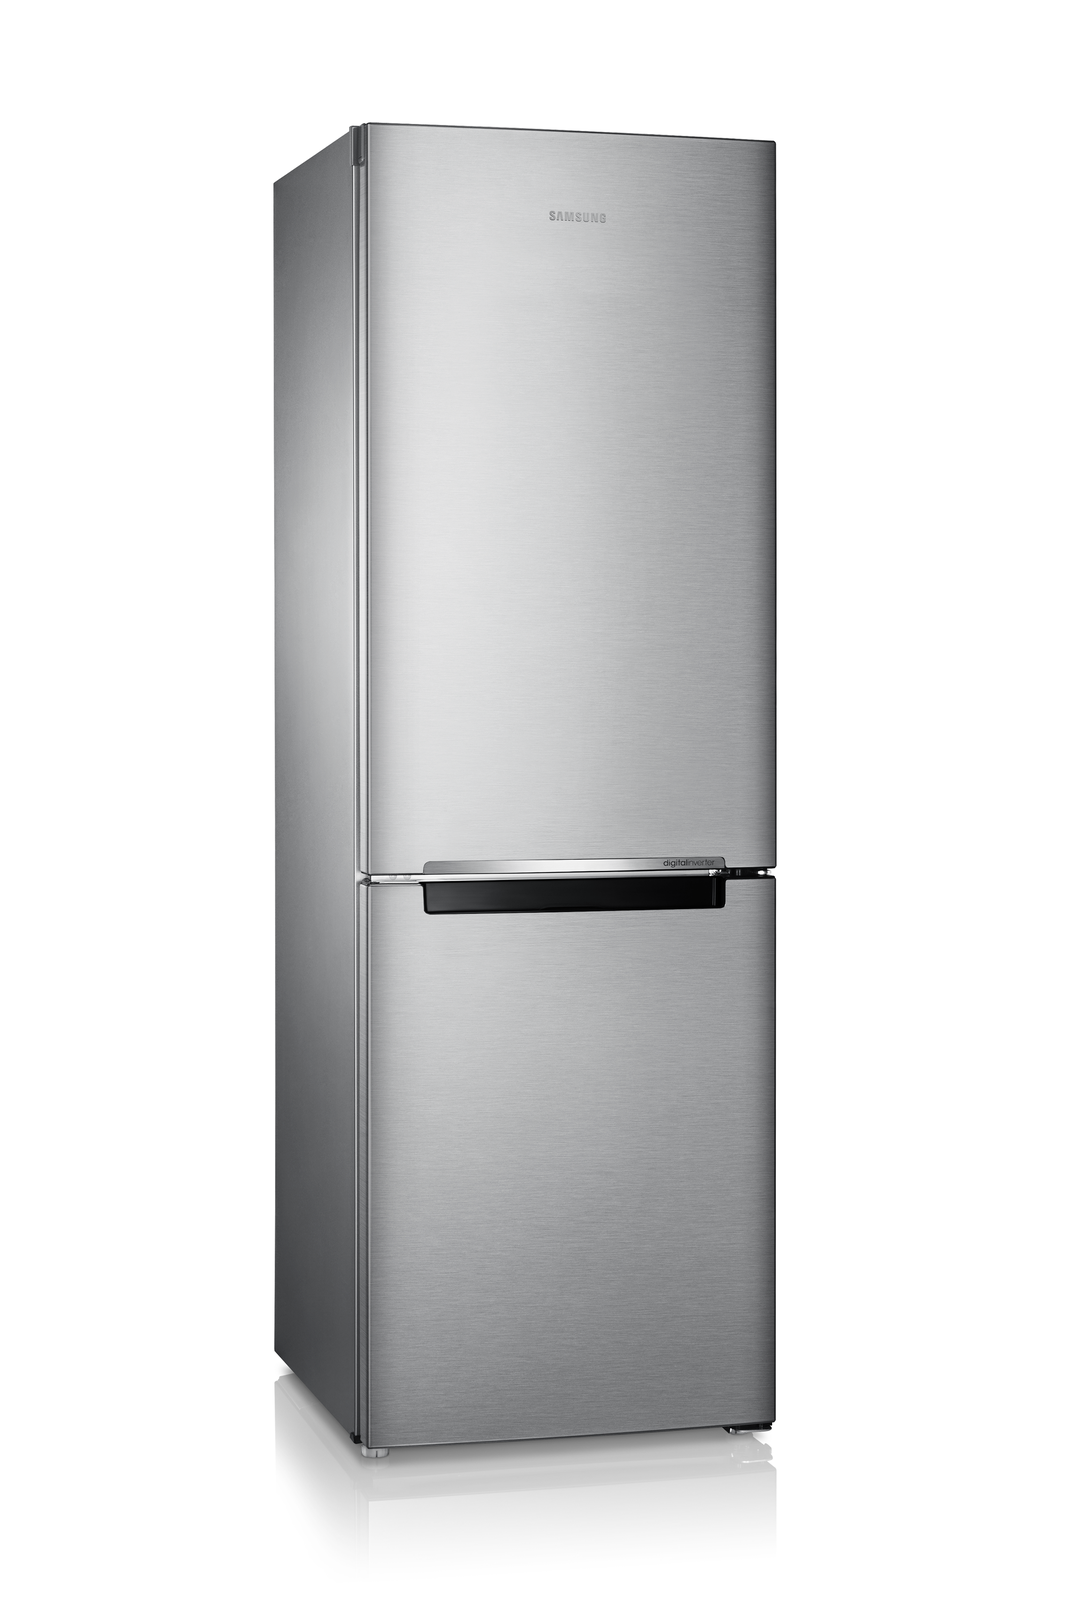 Samsung - 23.4 Inch 10.3 cu. ft Bottom Mount Refrigerator in Stainless - RB10FSR4ESR